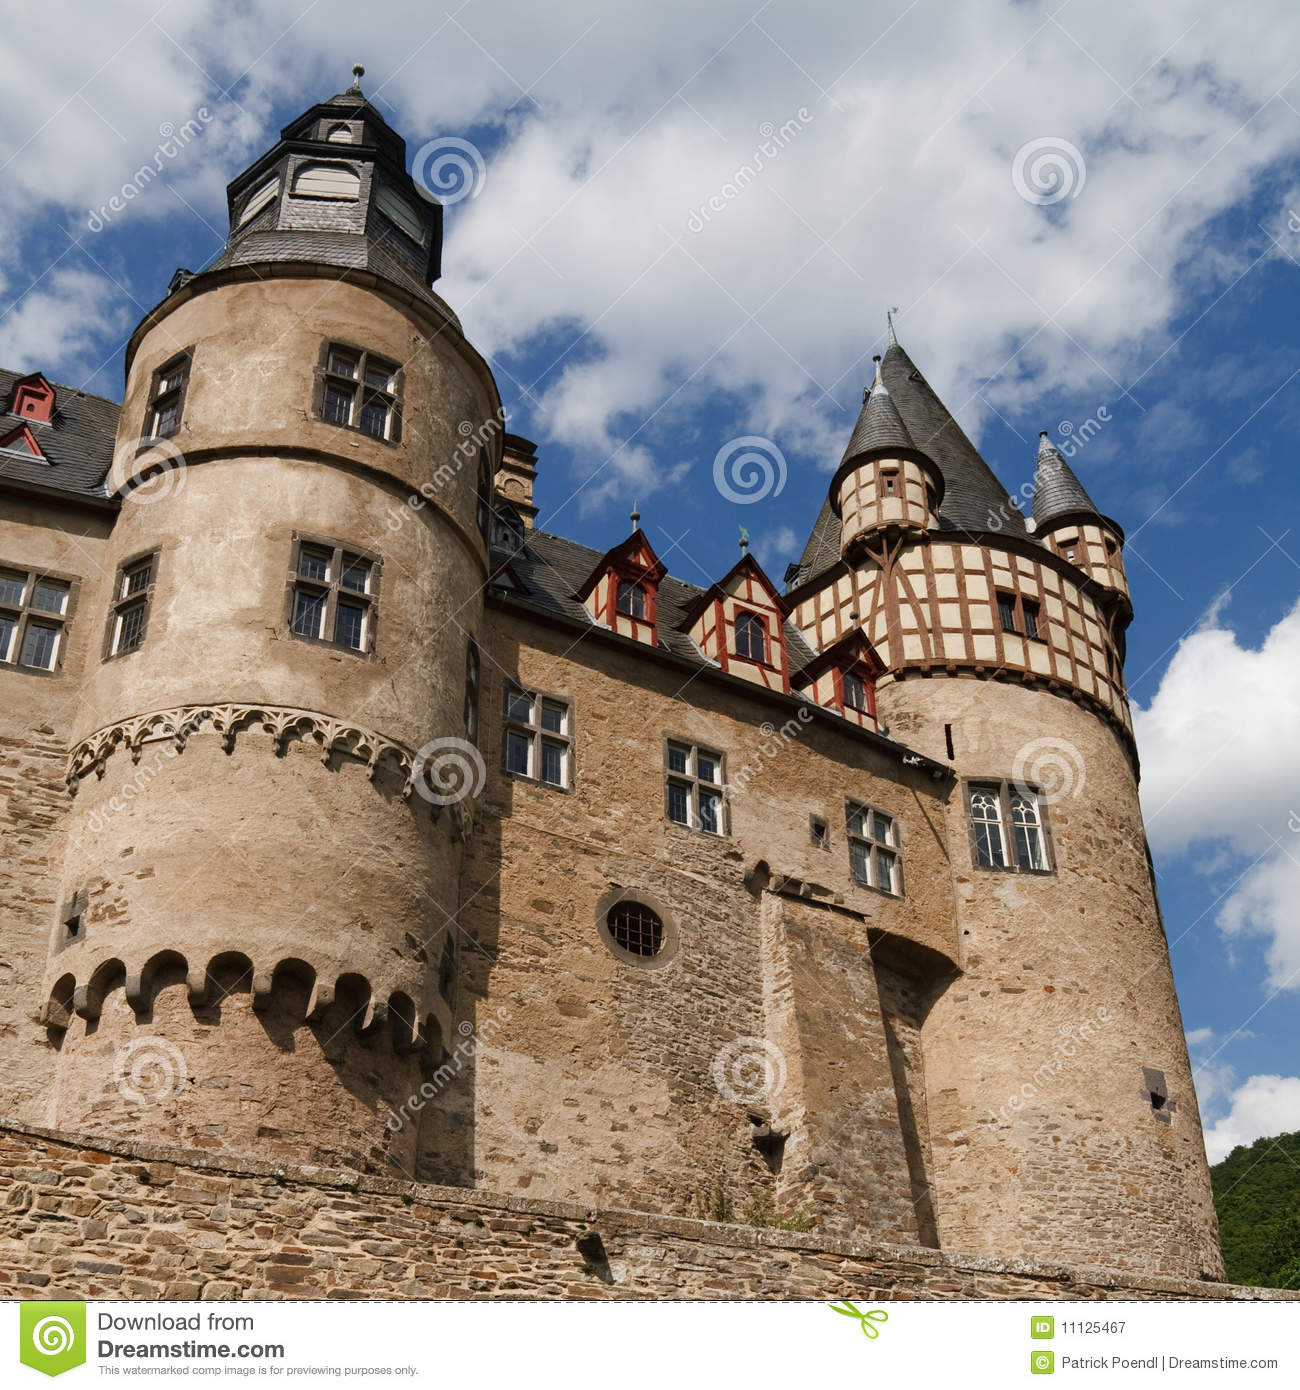 Burresheim Castle #2